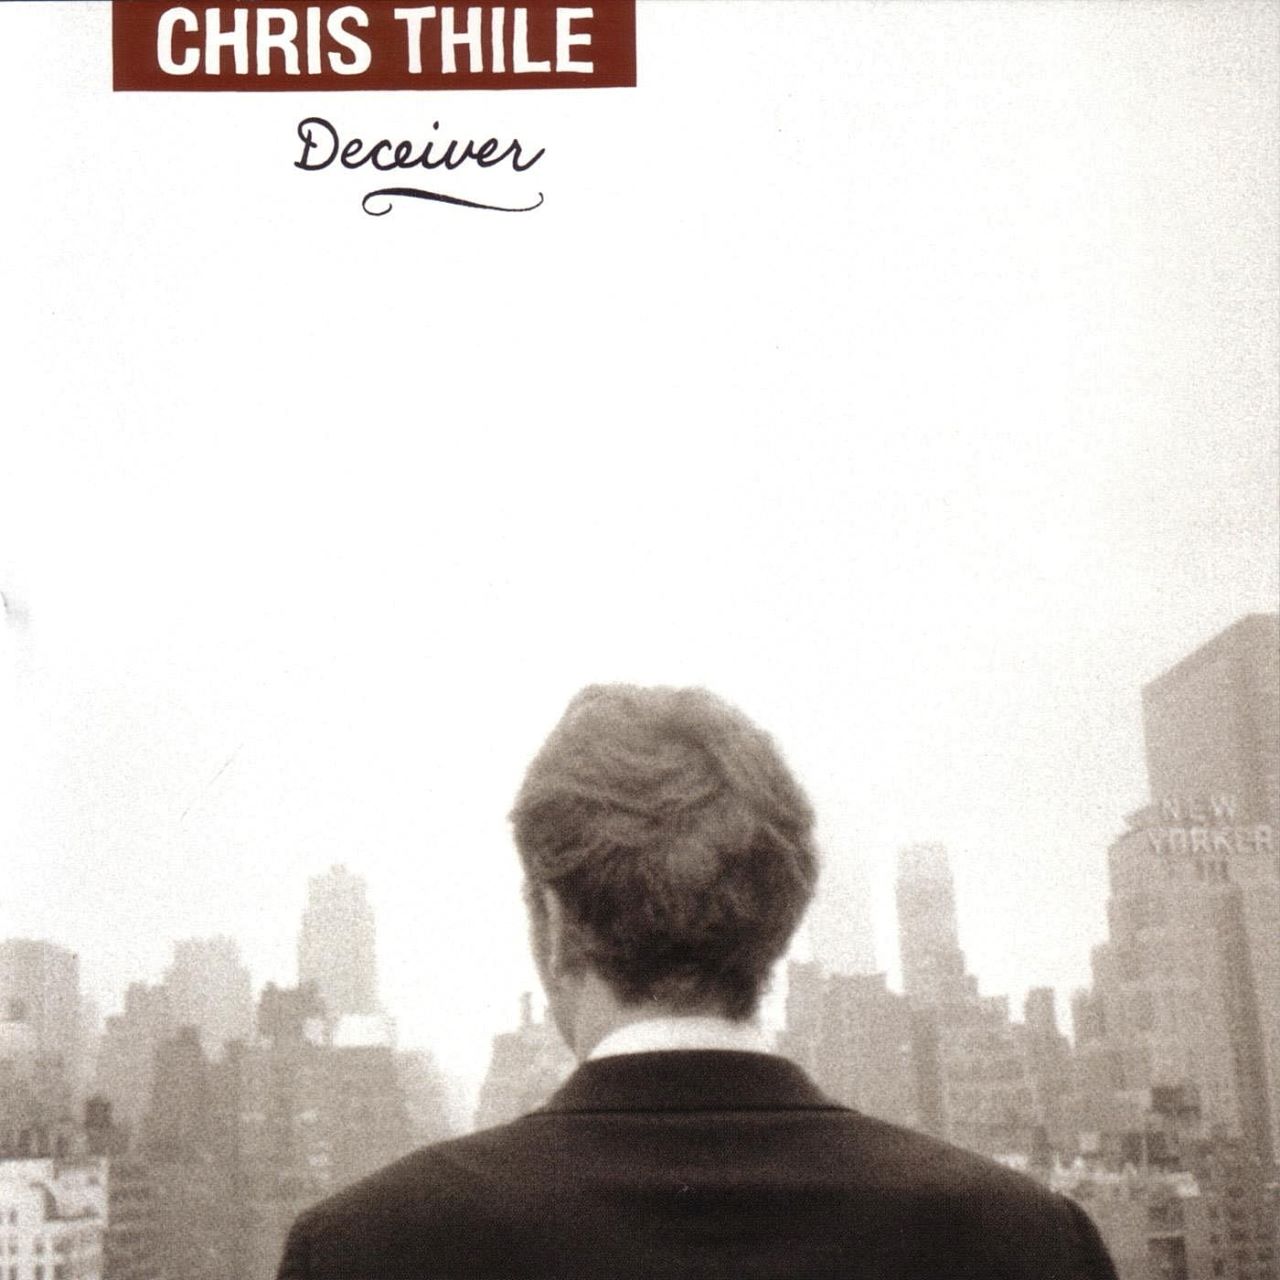 Chris Thile - Deceiver cover album